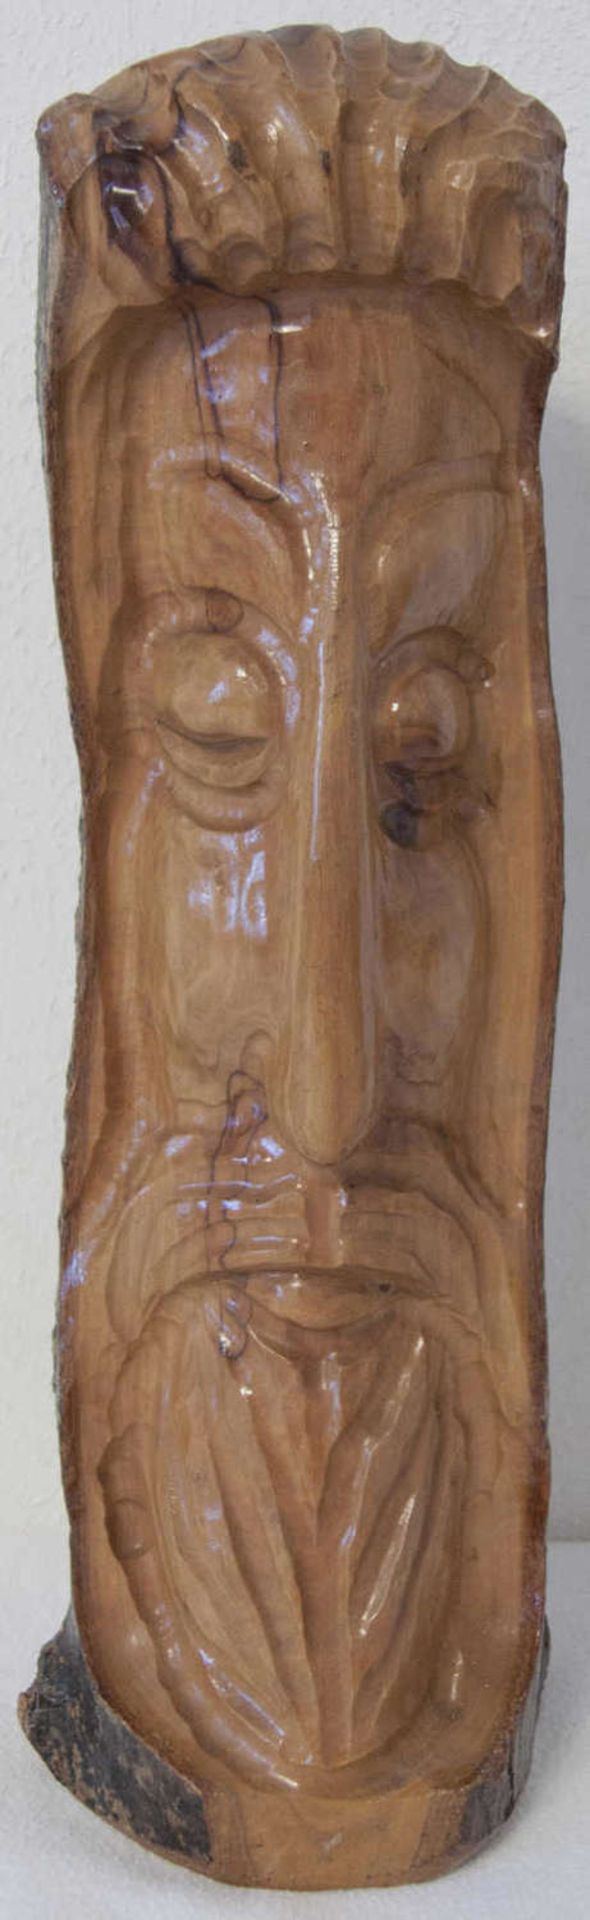 Holz - Skulptur, massiv aus einem Stück gefertigt. Lackiert. H: ca. 32 cm.Wood sculpture,